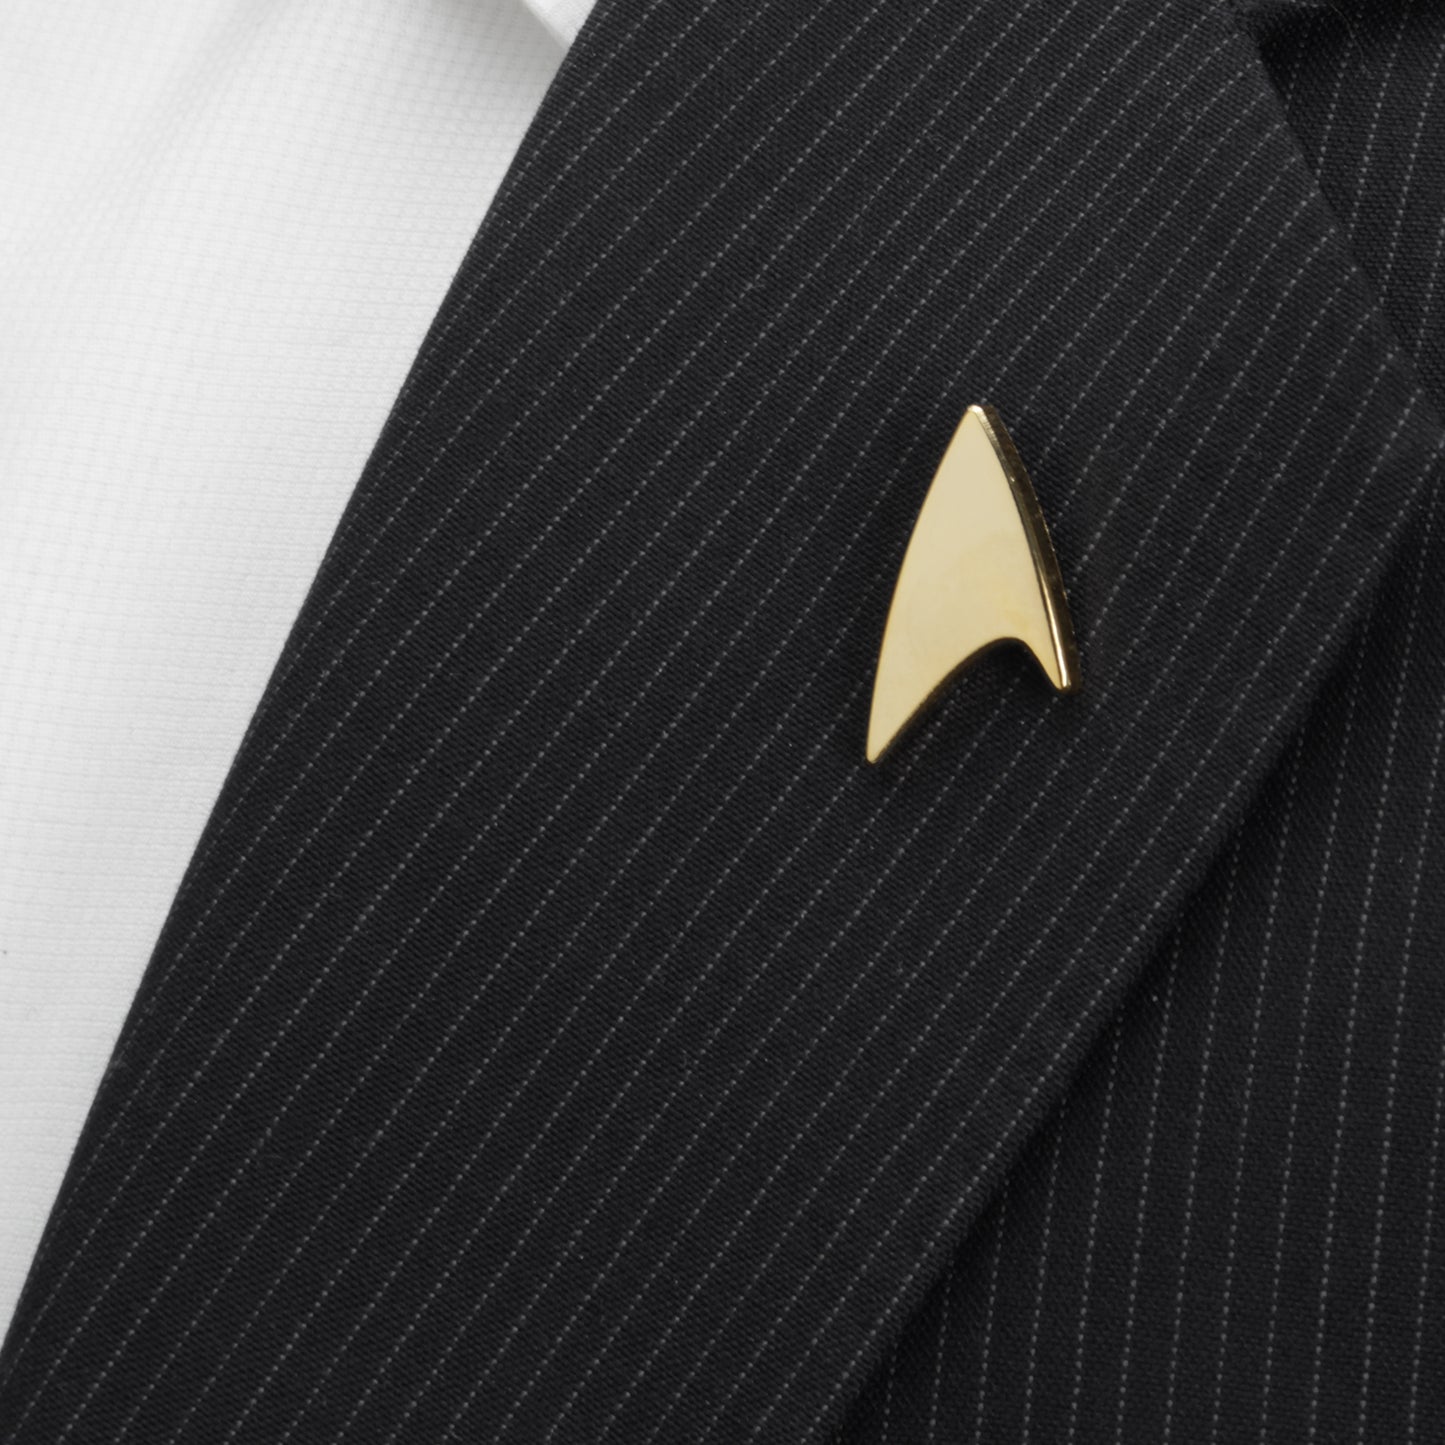 Star Trek Épingle de revers de l'écusson Delta en or